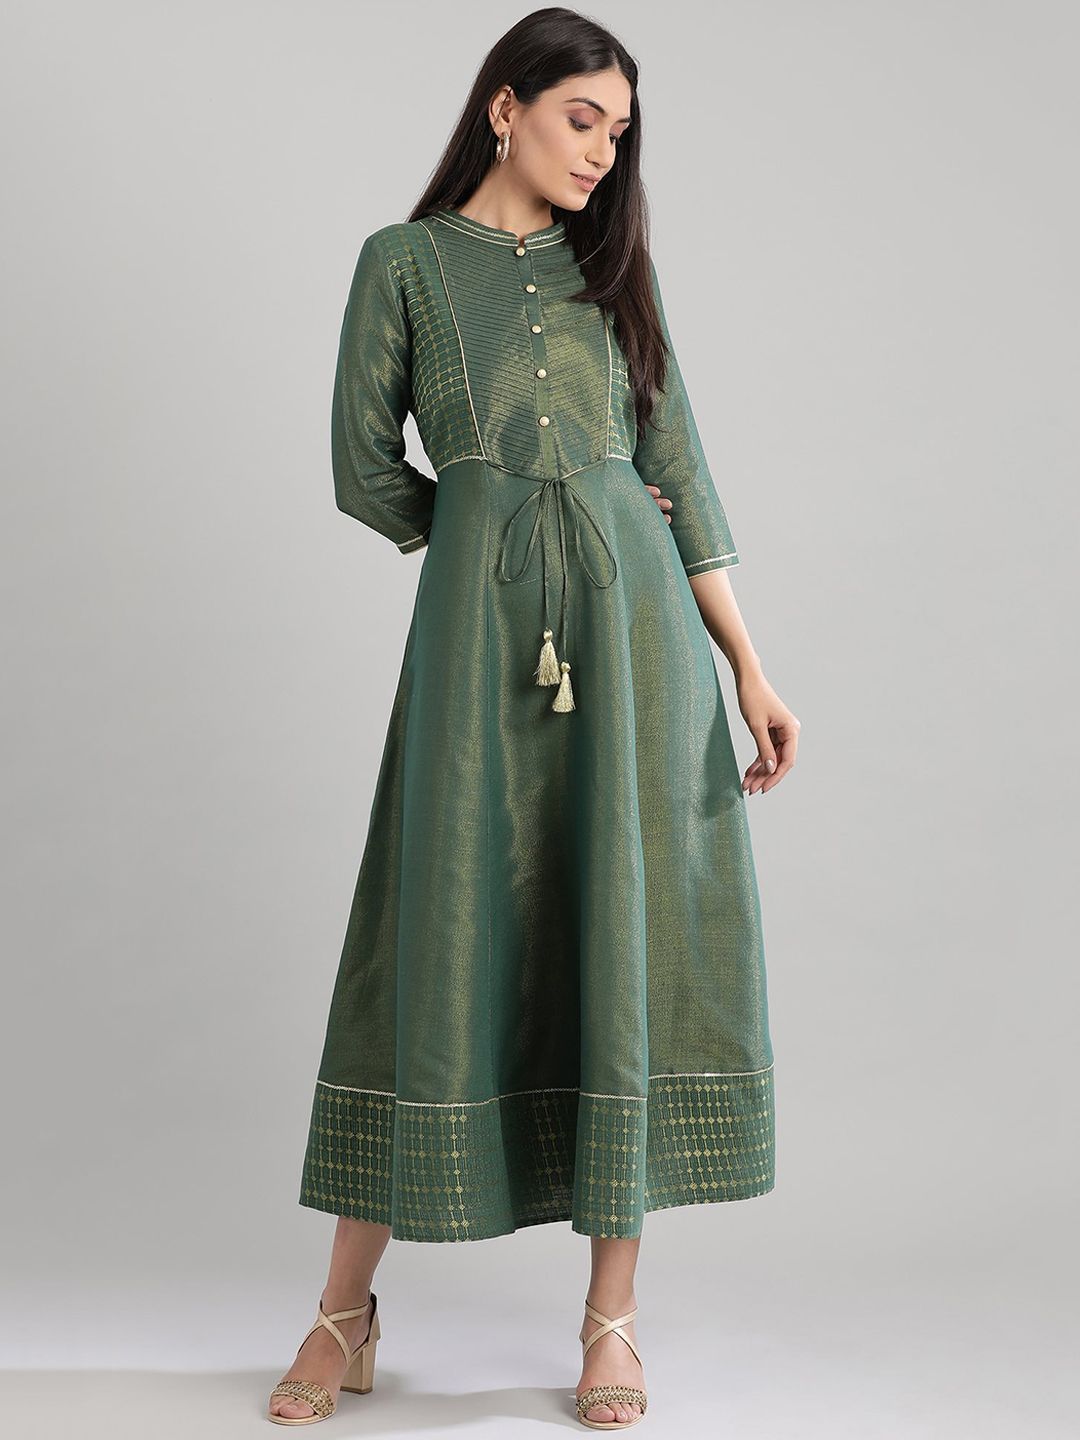 AURELIA Women Green Solid A-Line Dress Price in India